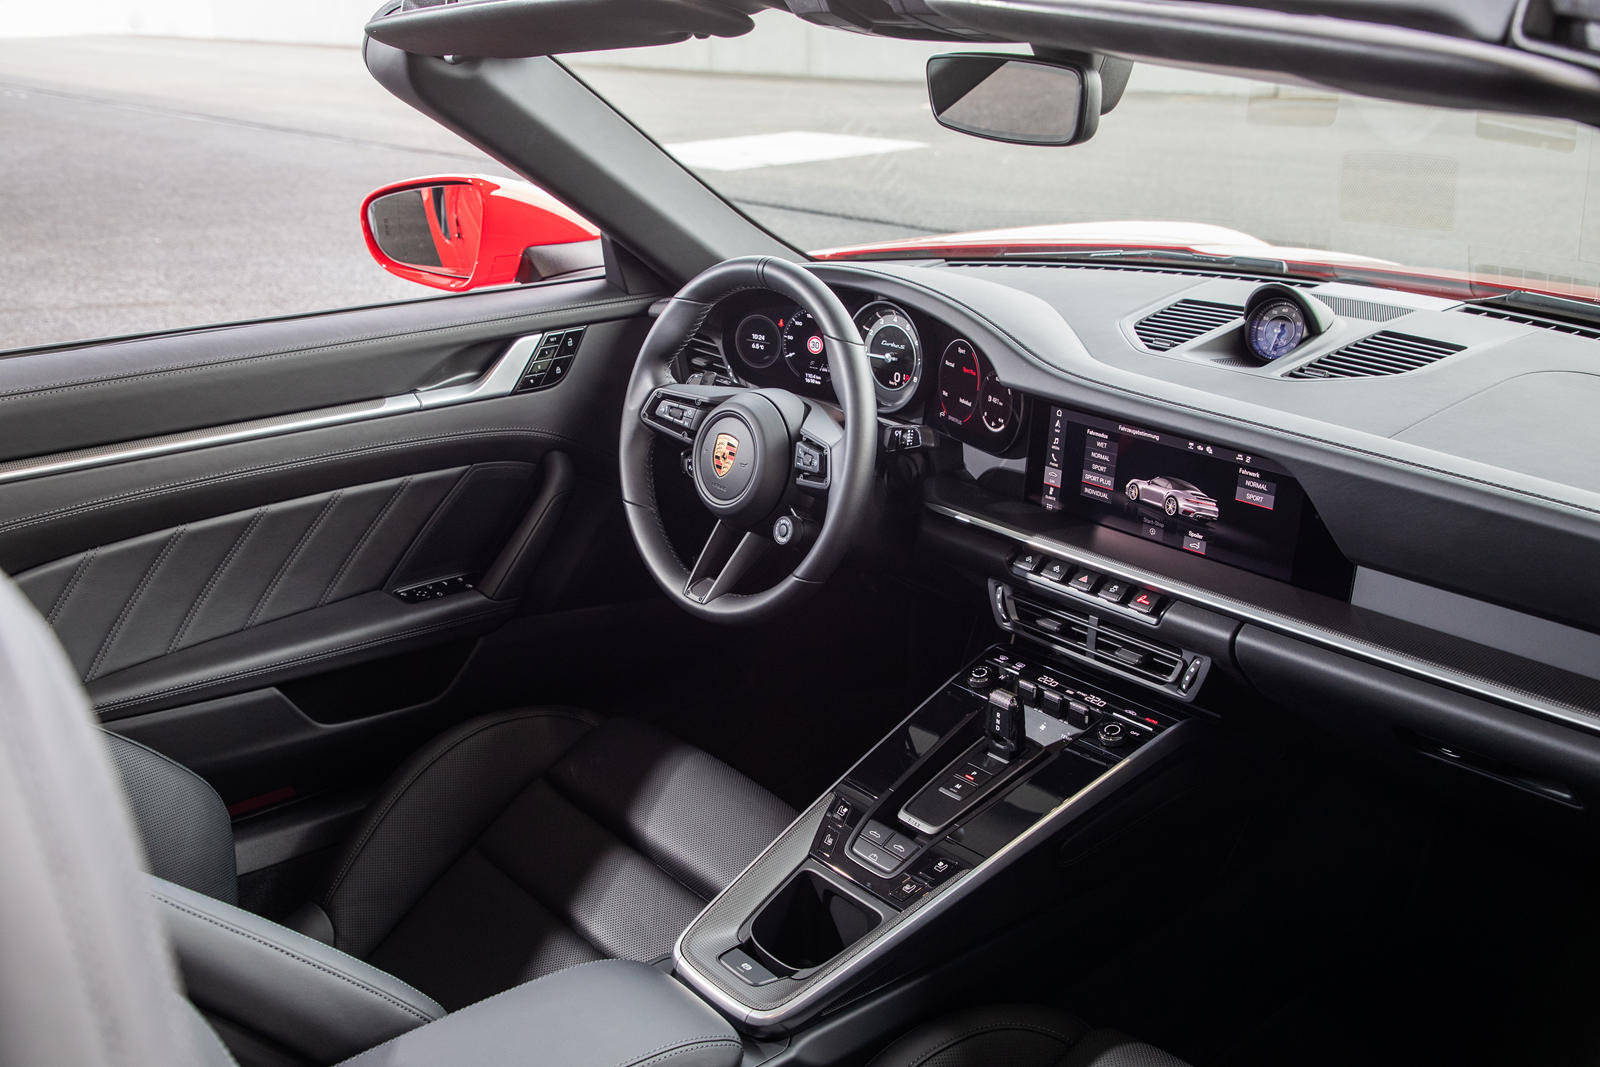 The interior design of the Porsche 911 Turbo S Cabriolet